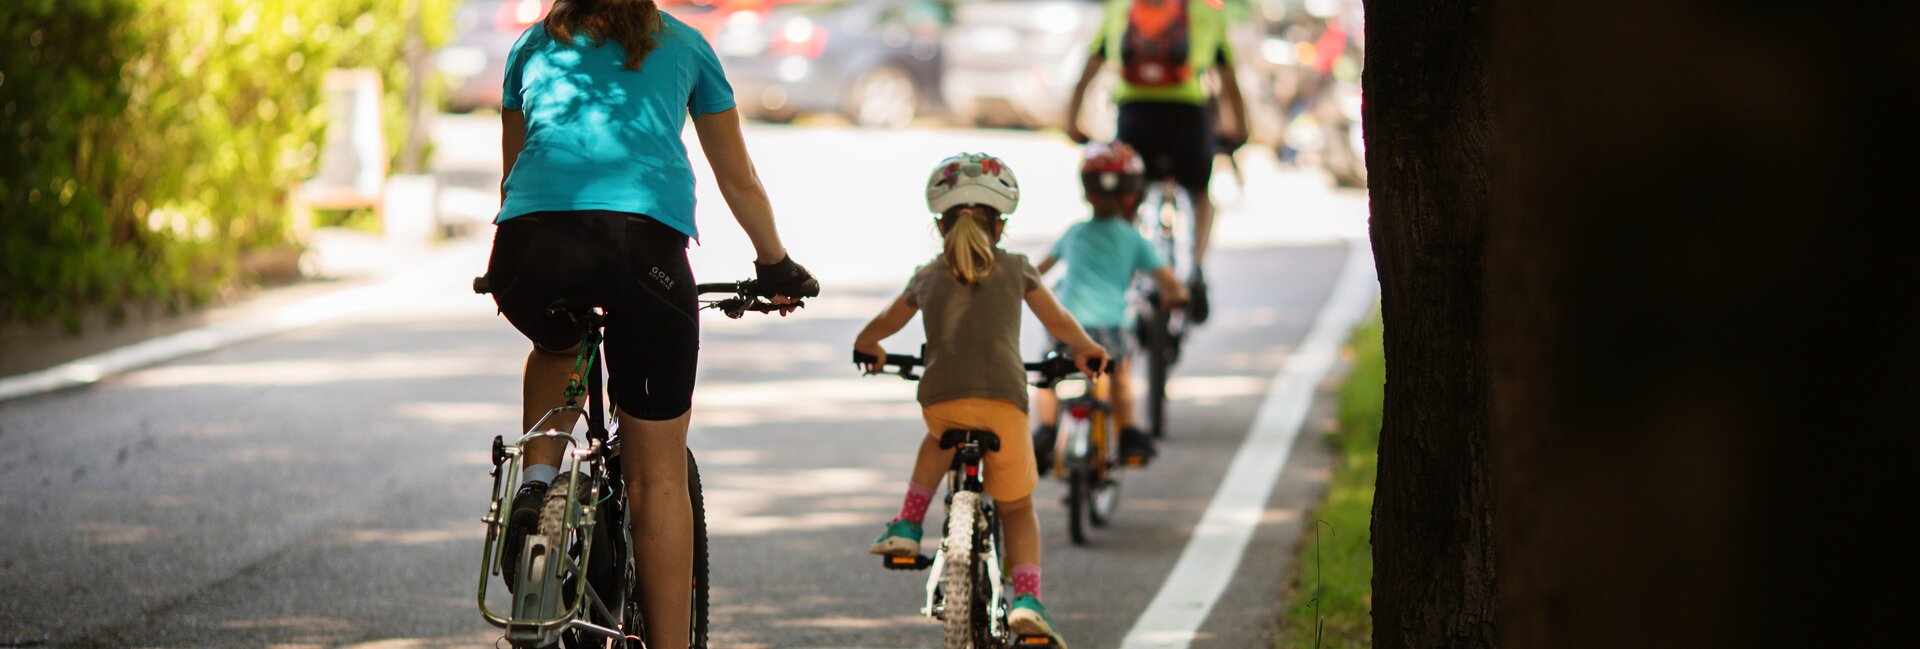 Riva del Garda - Fahrrad auf dem Fahrrad Familie - Urlaub mit Kindern